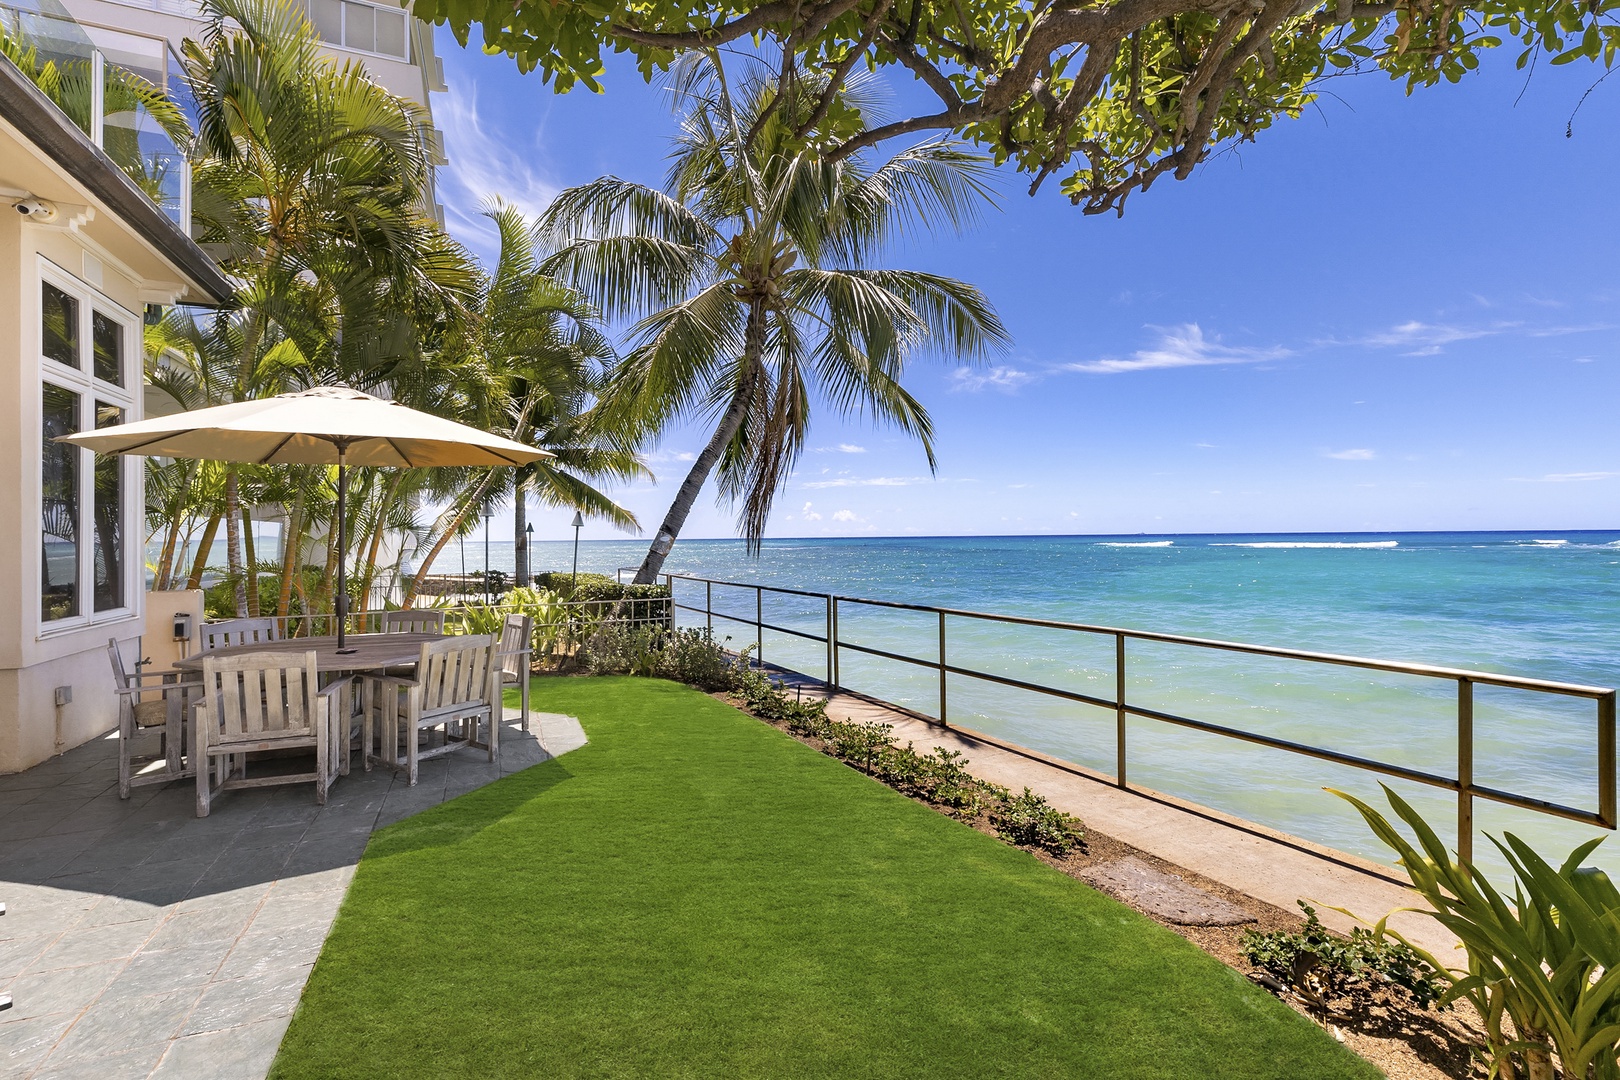 Honolulu Vacation Rentals, Diamond Head Surf House - Diamond Head Surf House offers spectacular ocean views.